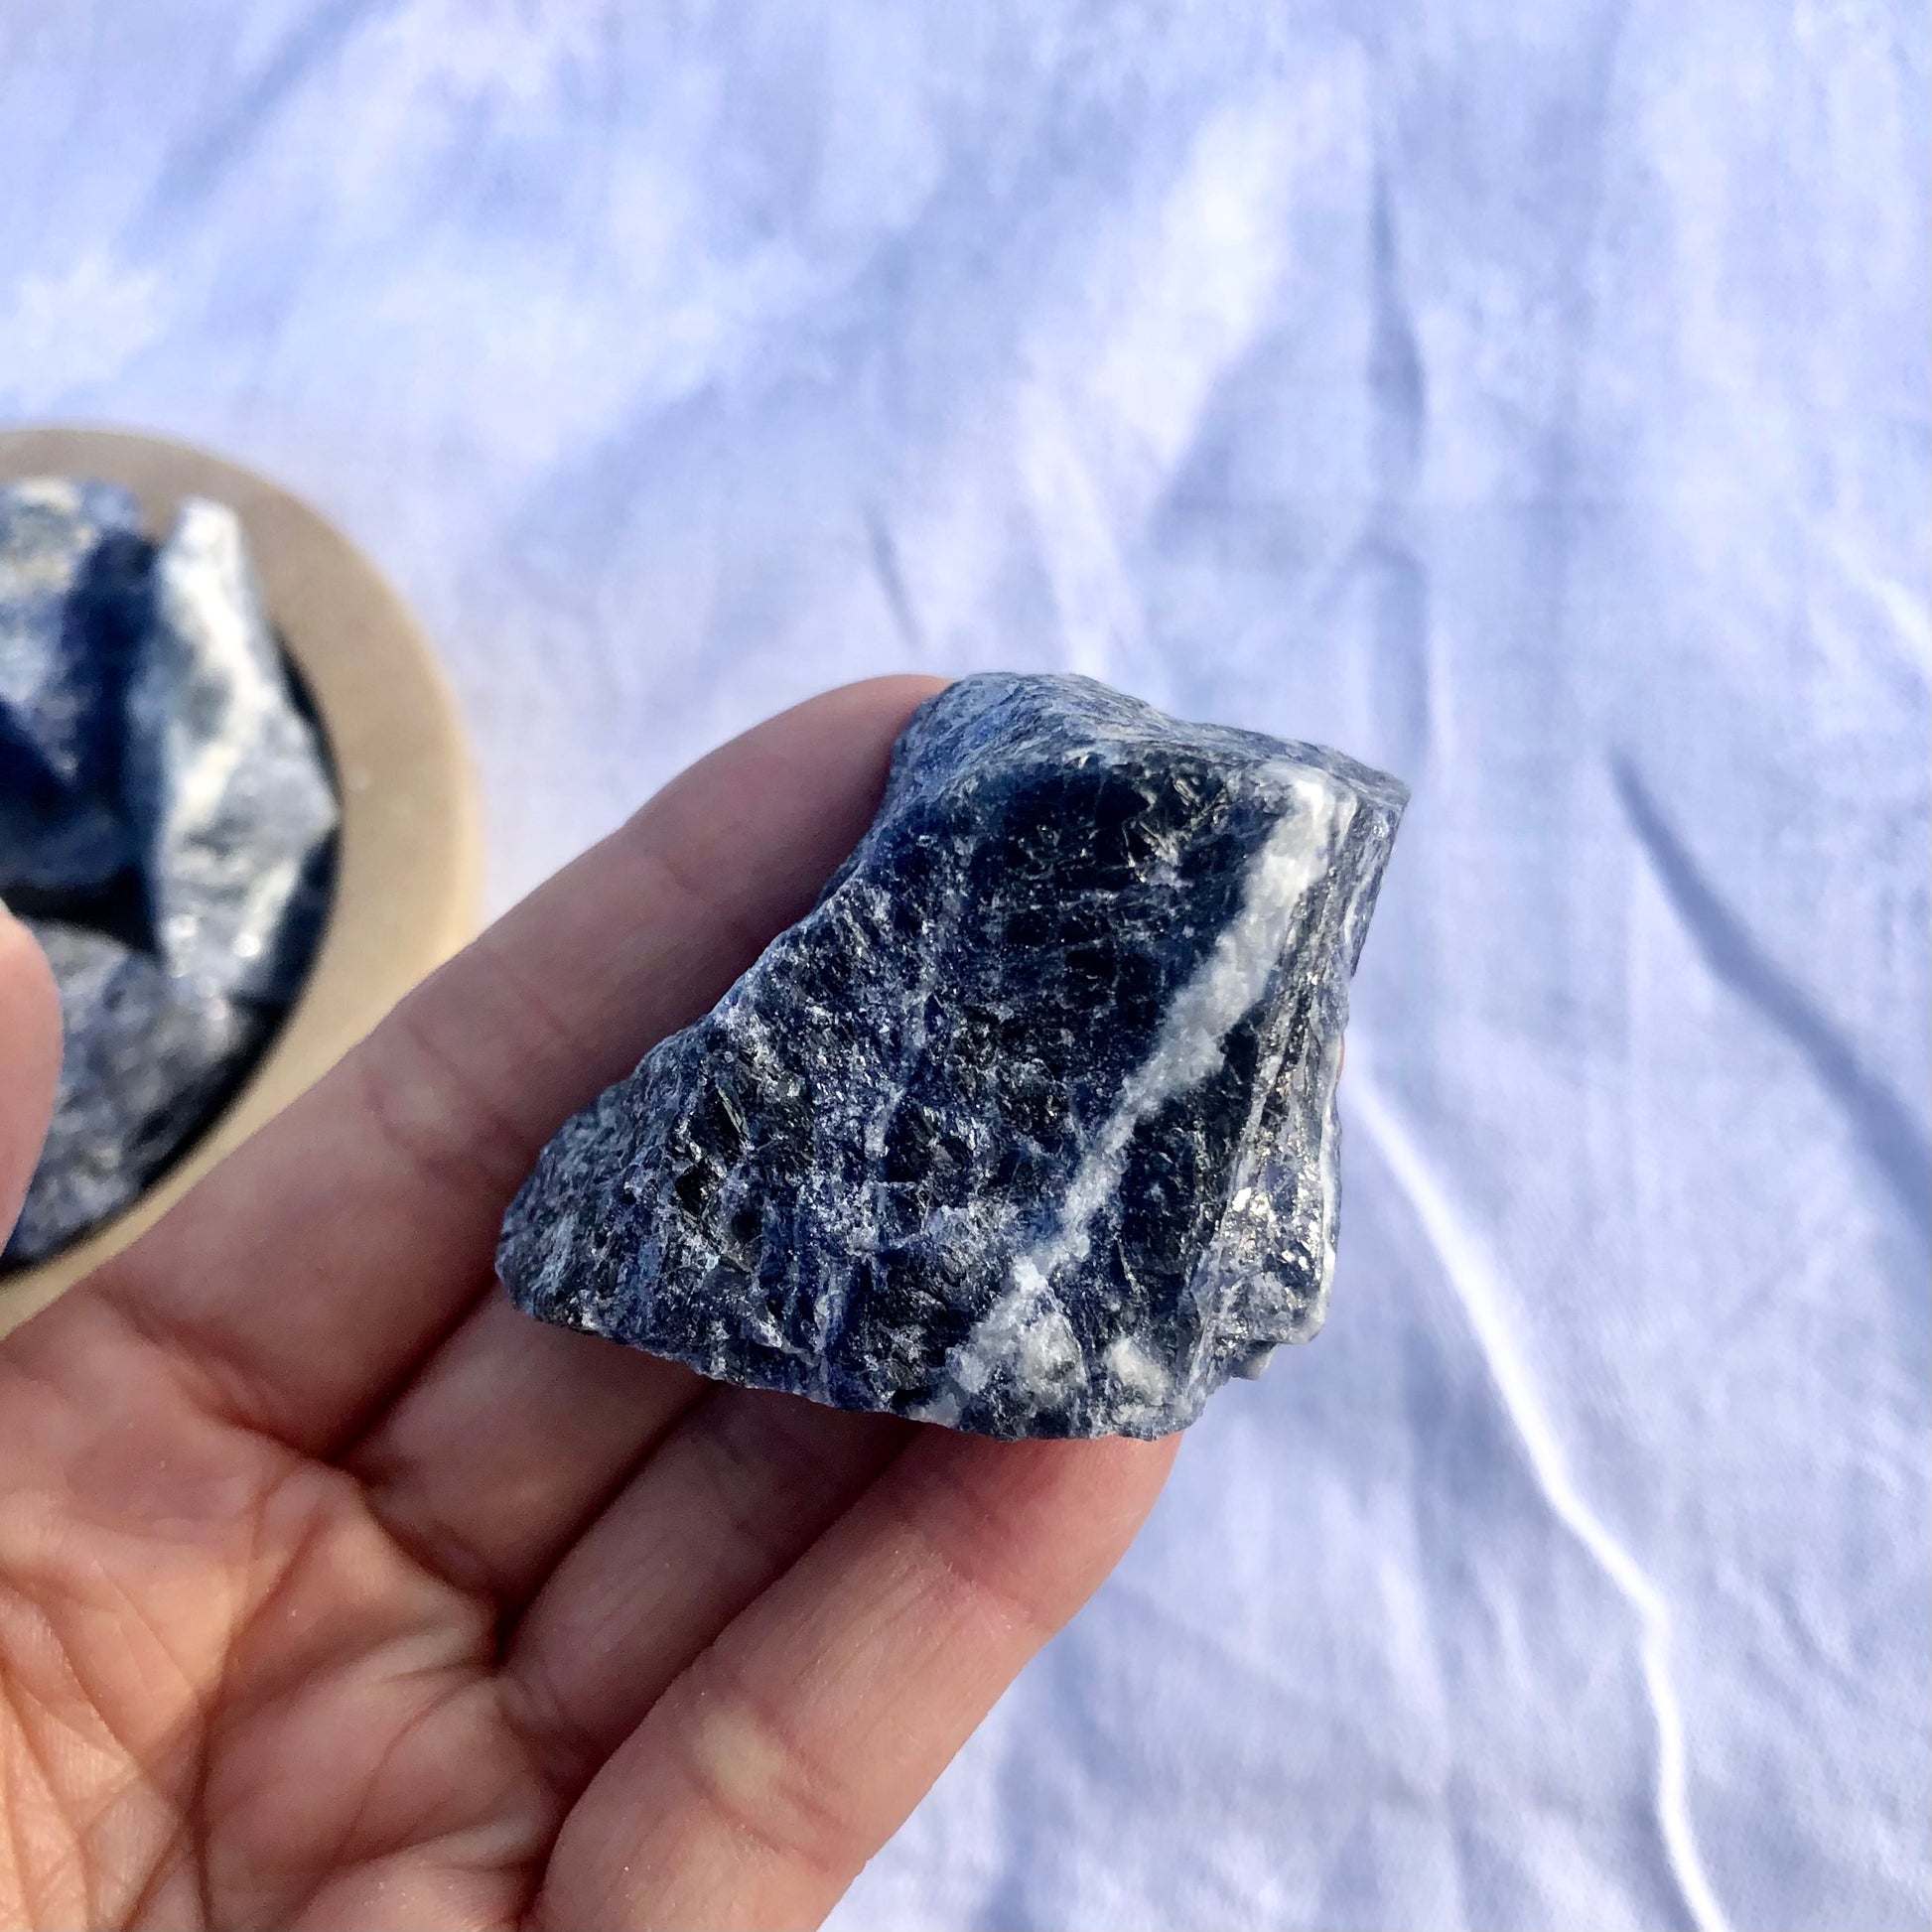 Resonant Energies Dark Blue Sodalite Tumbled Polished Natural Stones, 1 oz  Set, Small Size, Reiki Wicca Chakra Crystal Healing Gemstone, TS5039